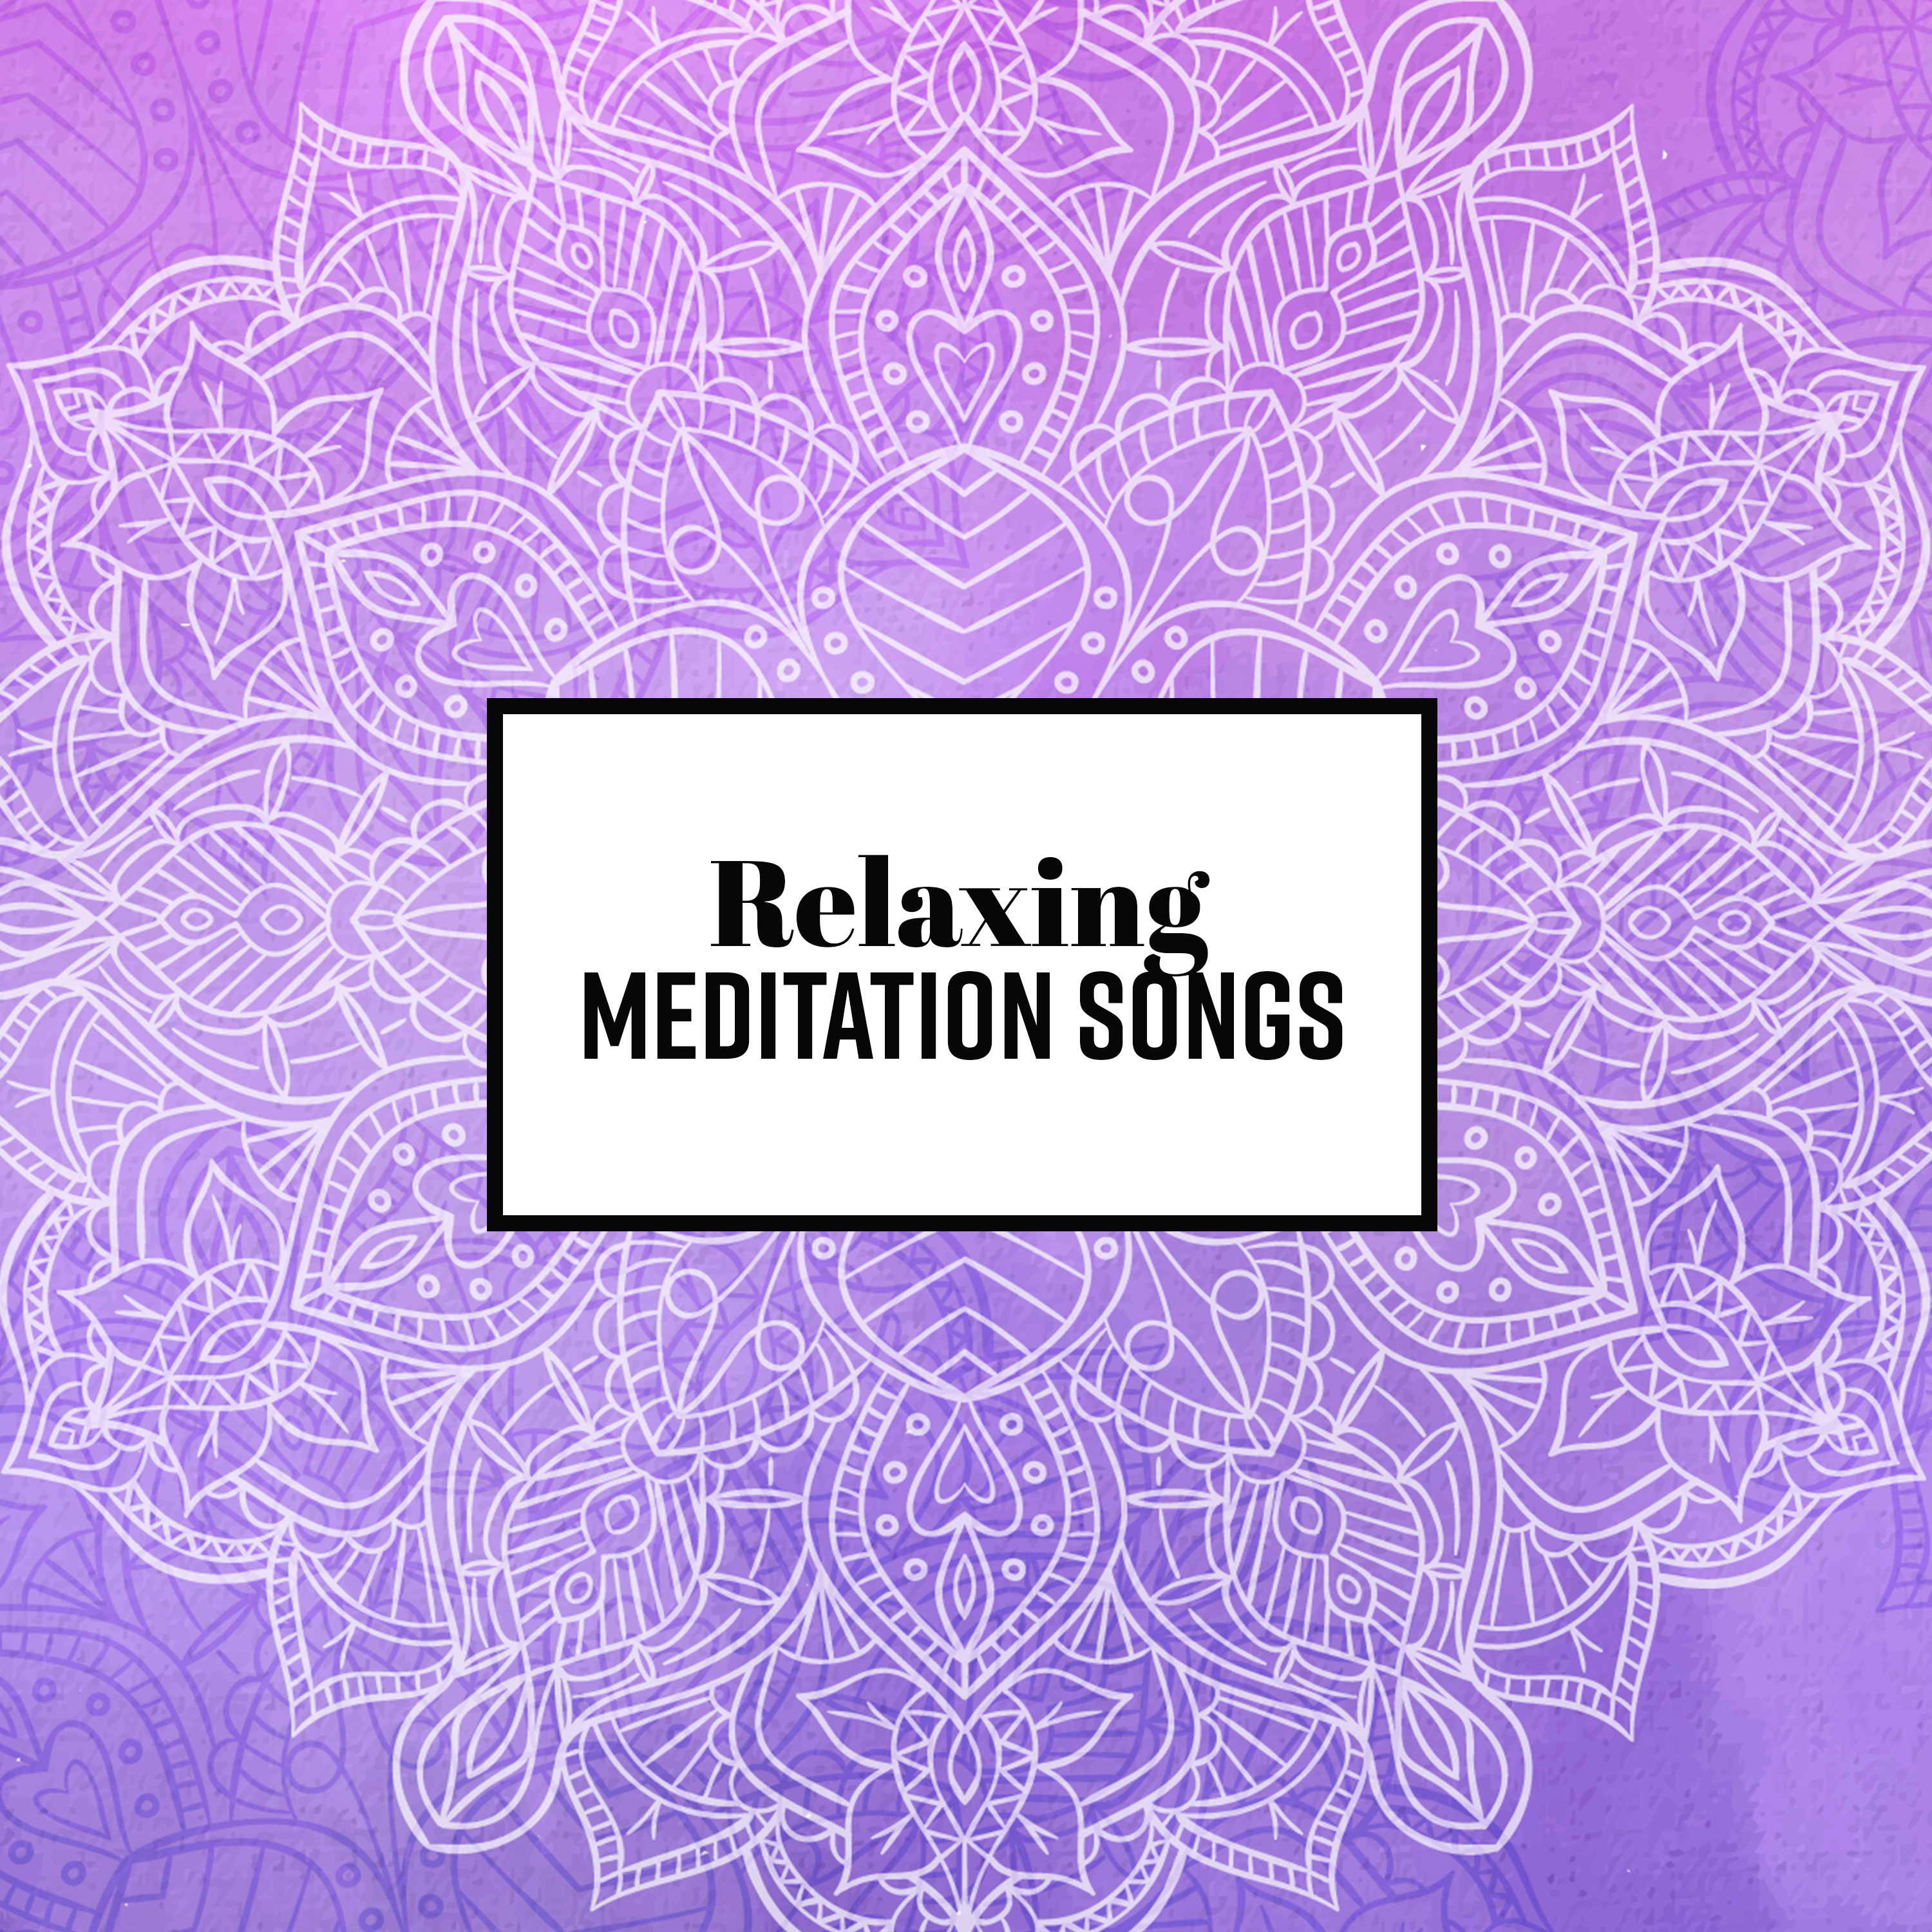 Relaxing Meditation Songs